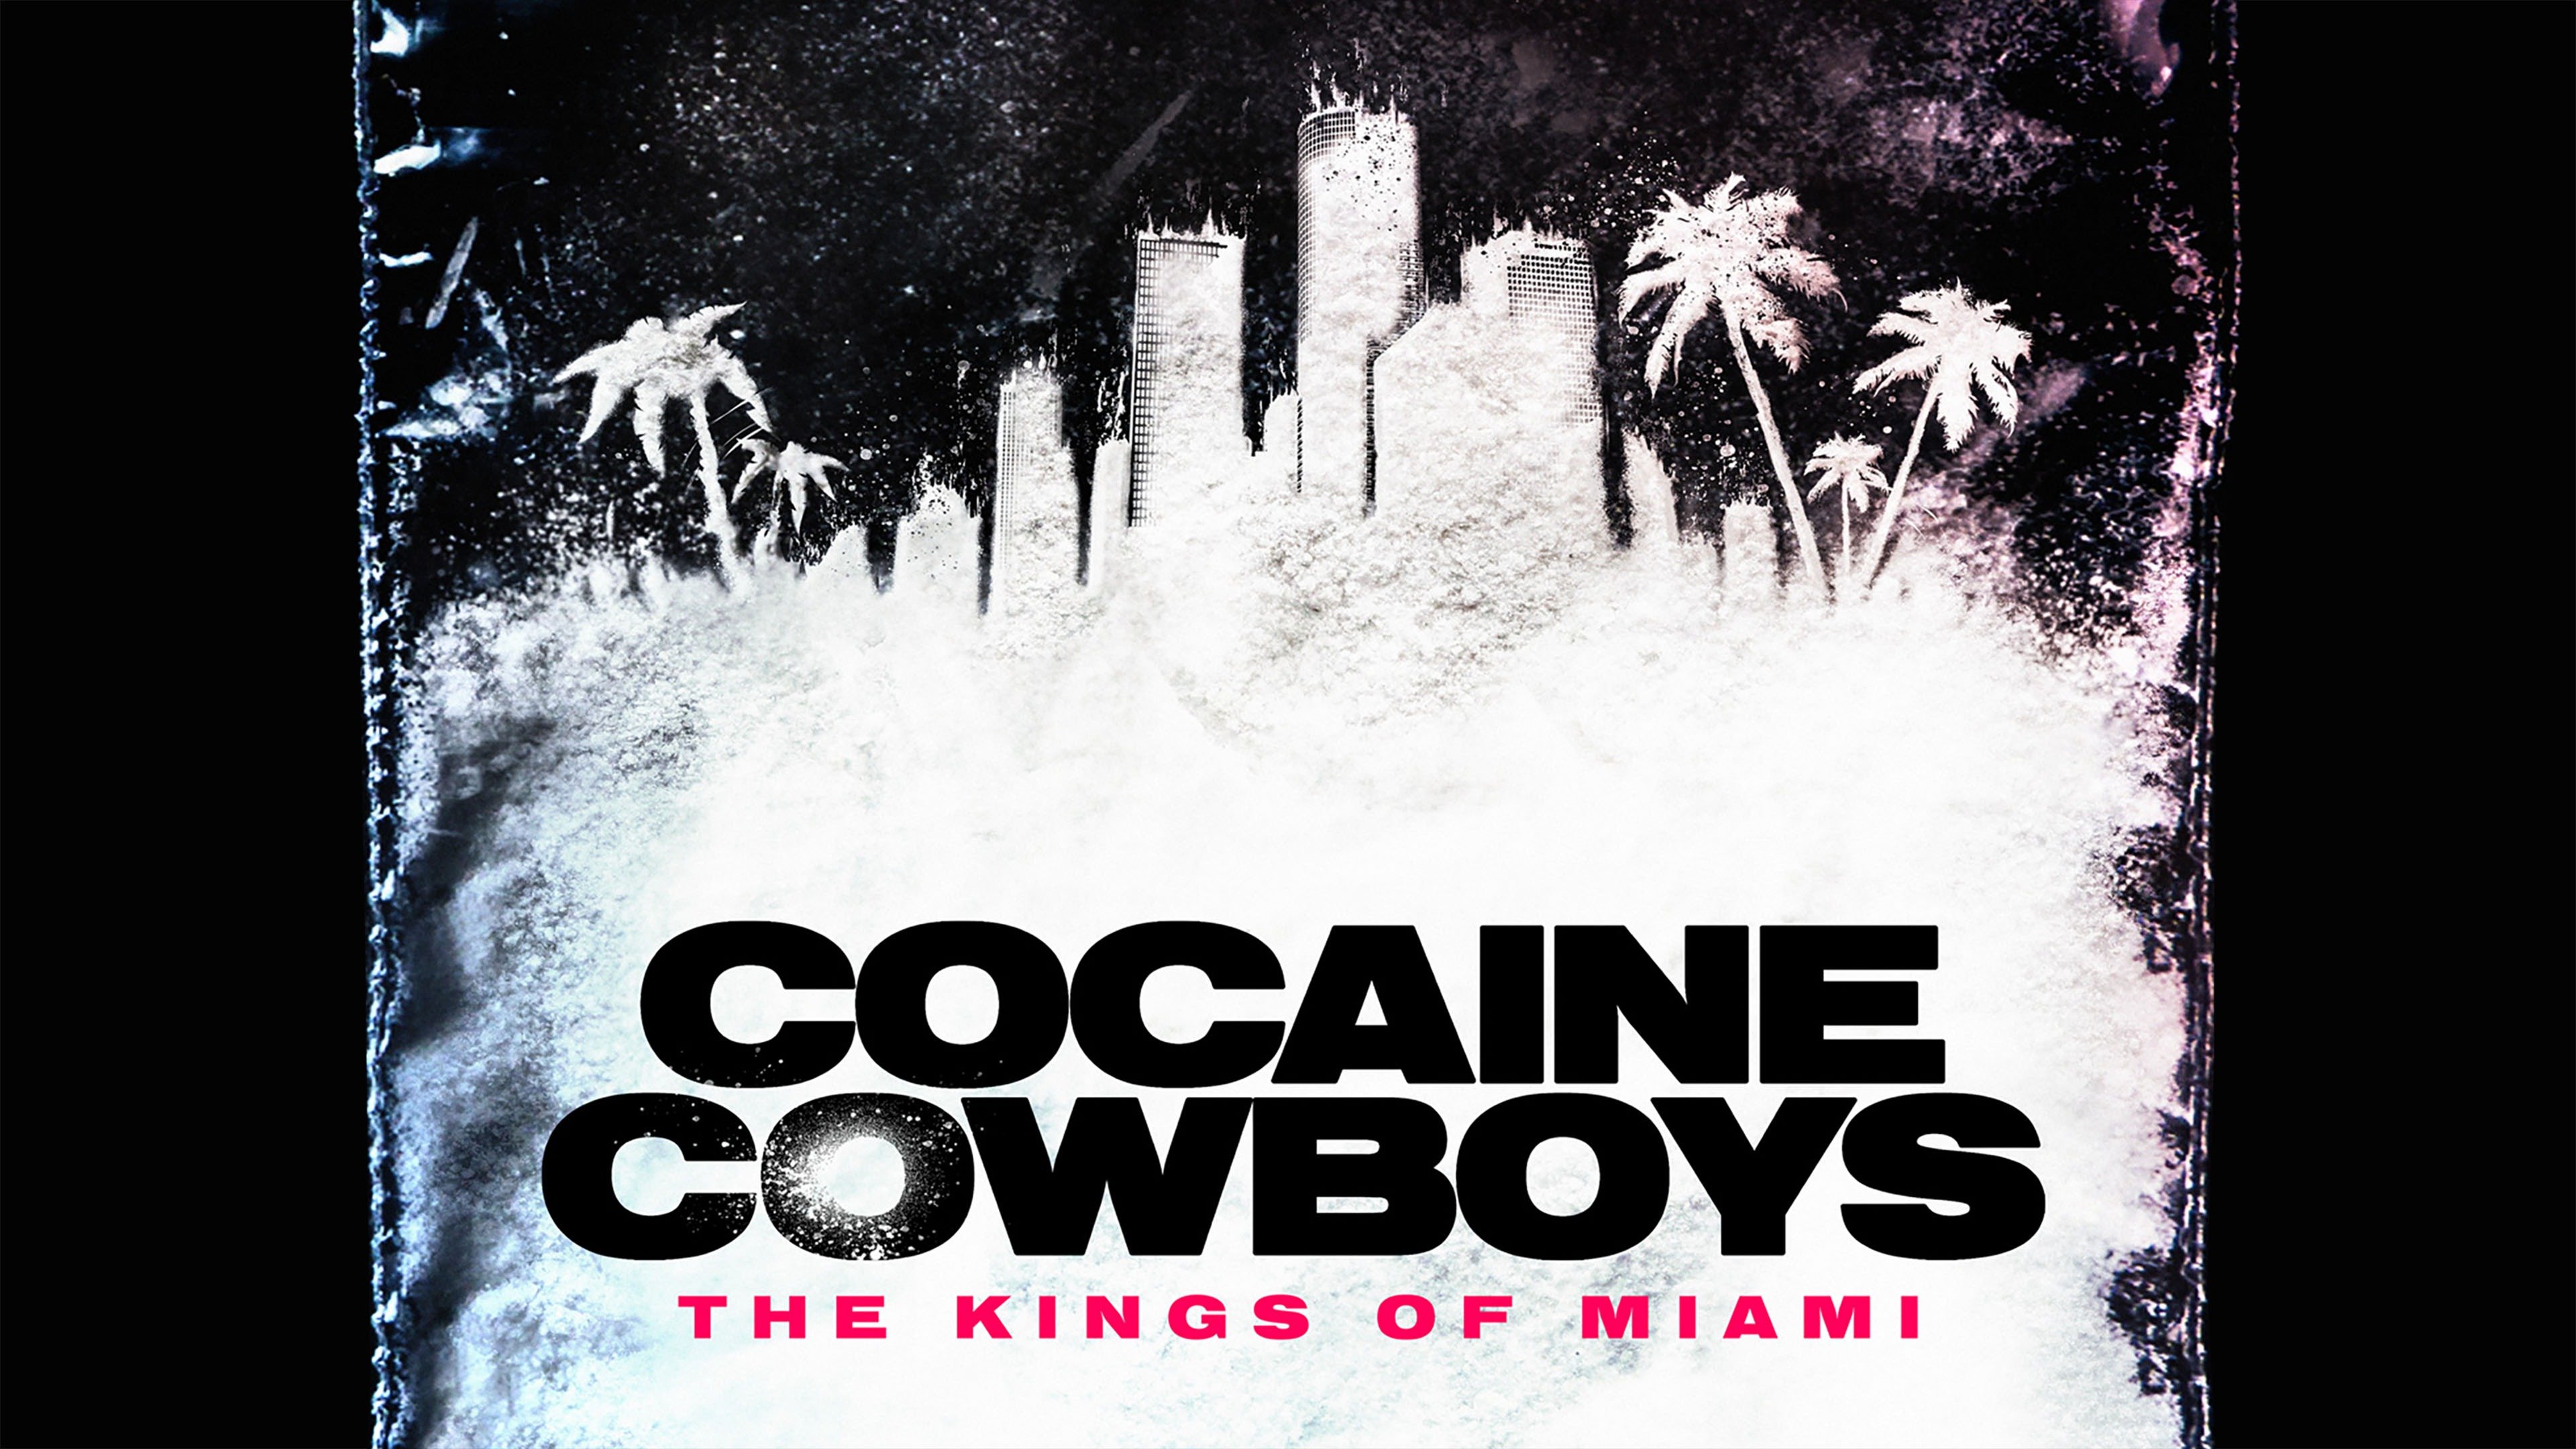 "Cocaine Cowboys: The Kings of Miami: Miniseries photo 4"